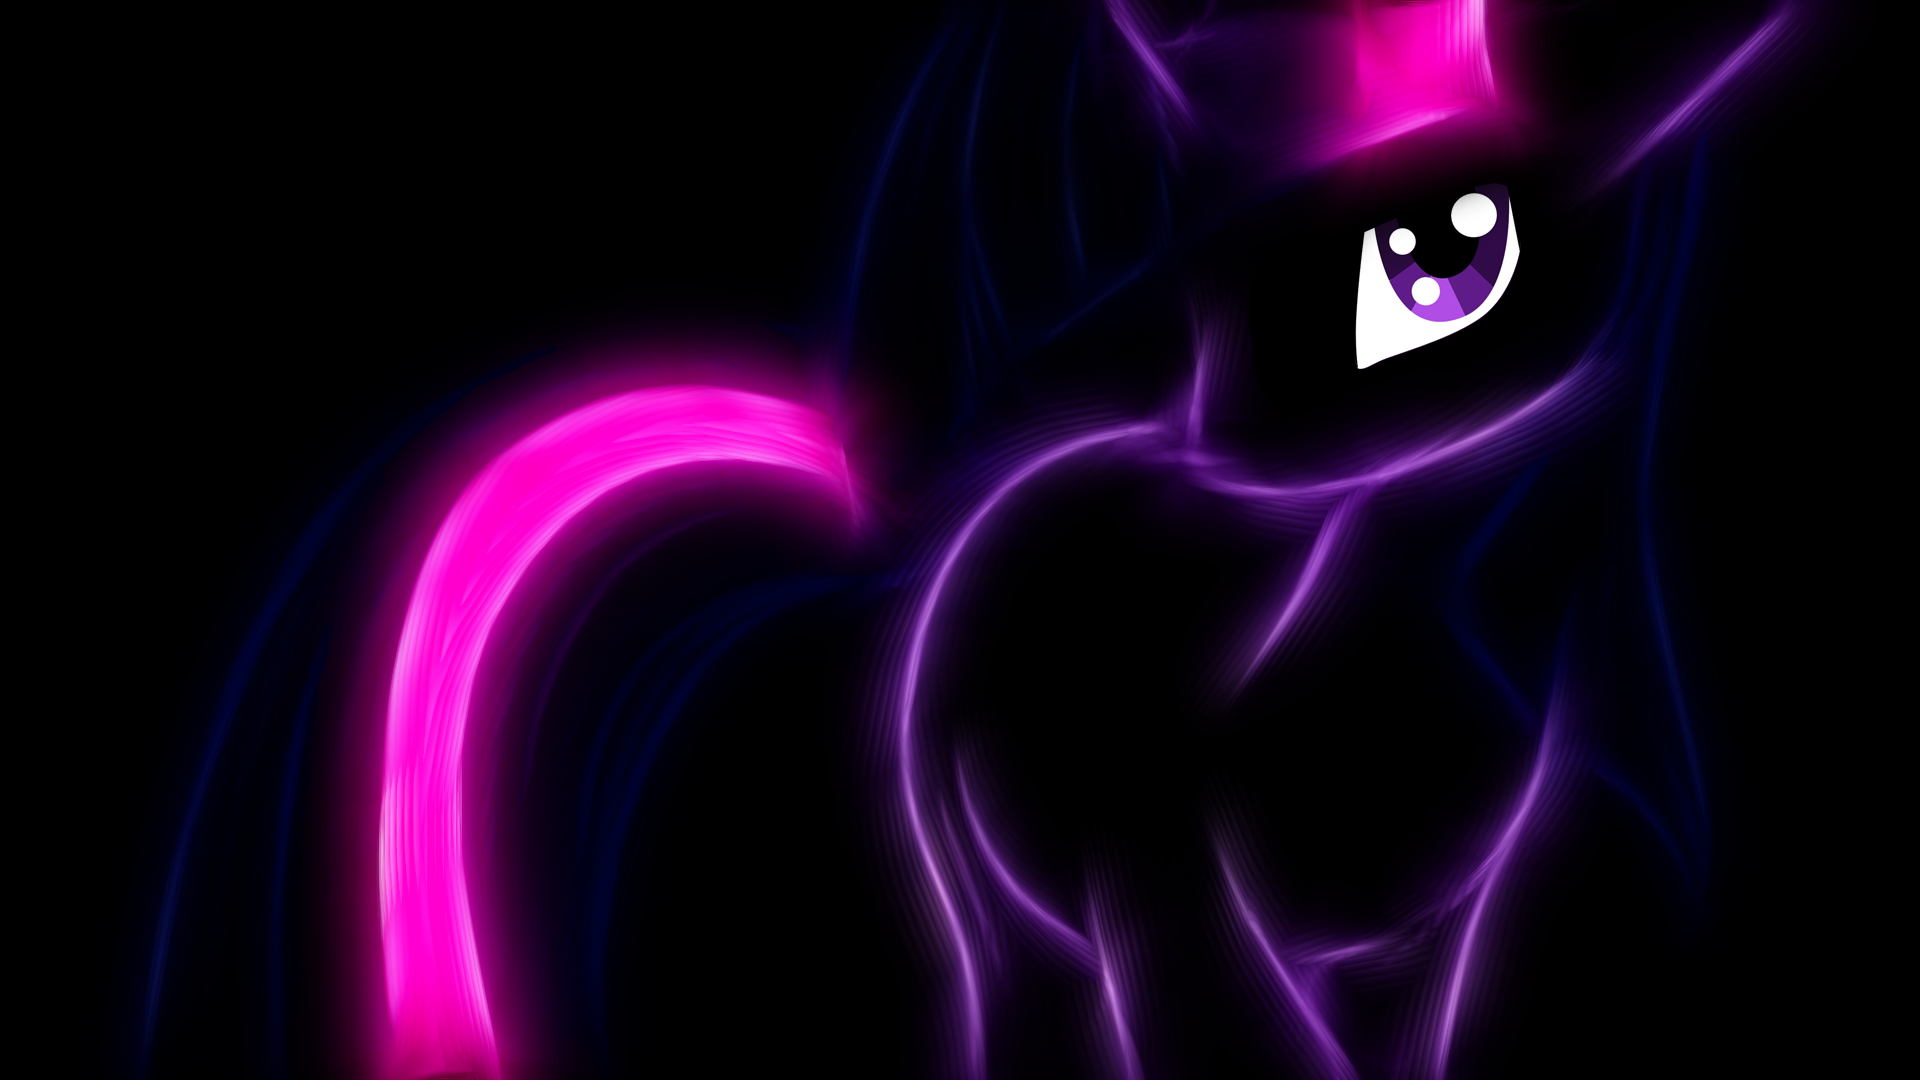 My Little Pony: Friendship Is Magic - HD Wallpaper 